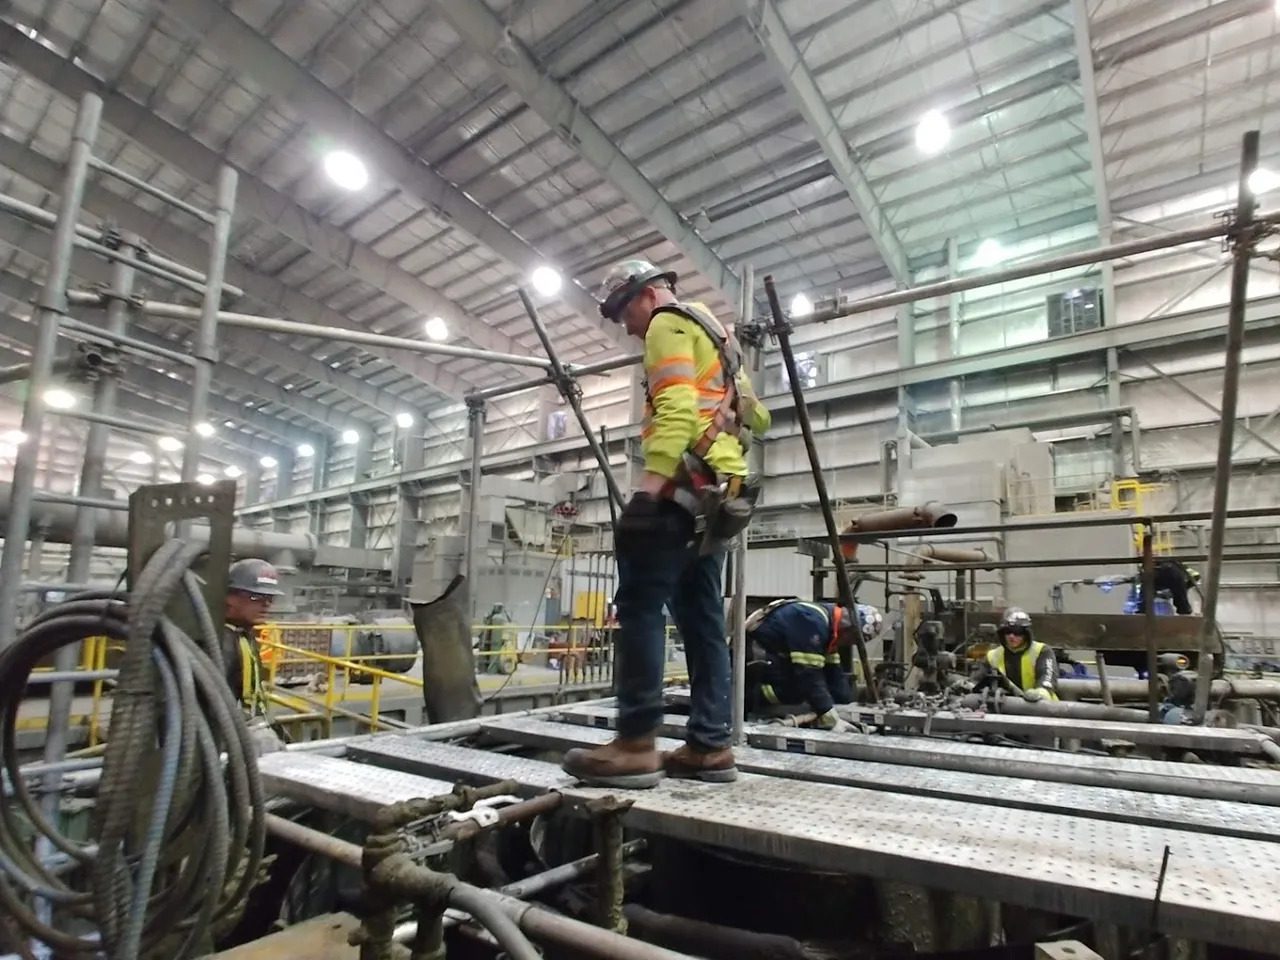 A man in yellow vest standing on top of metal platform.